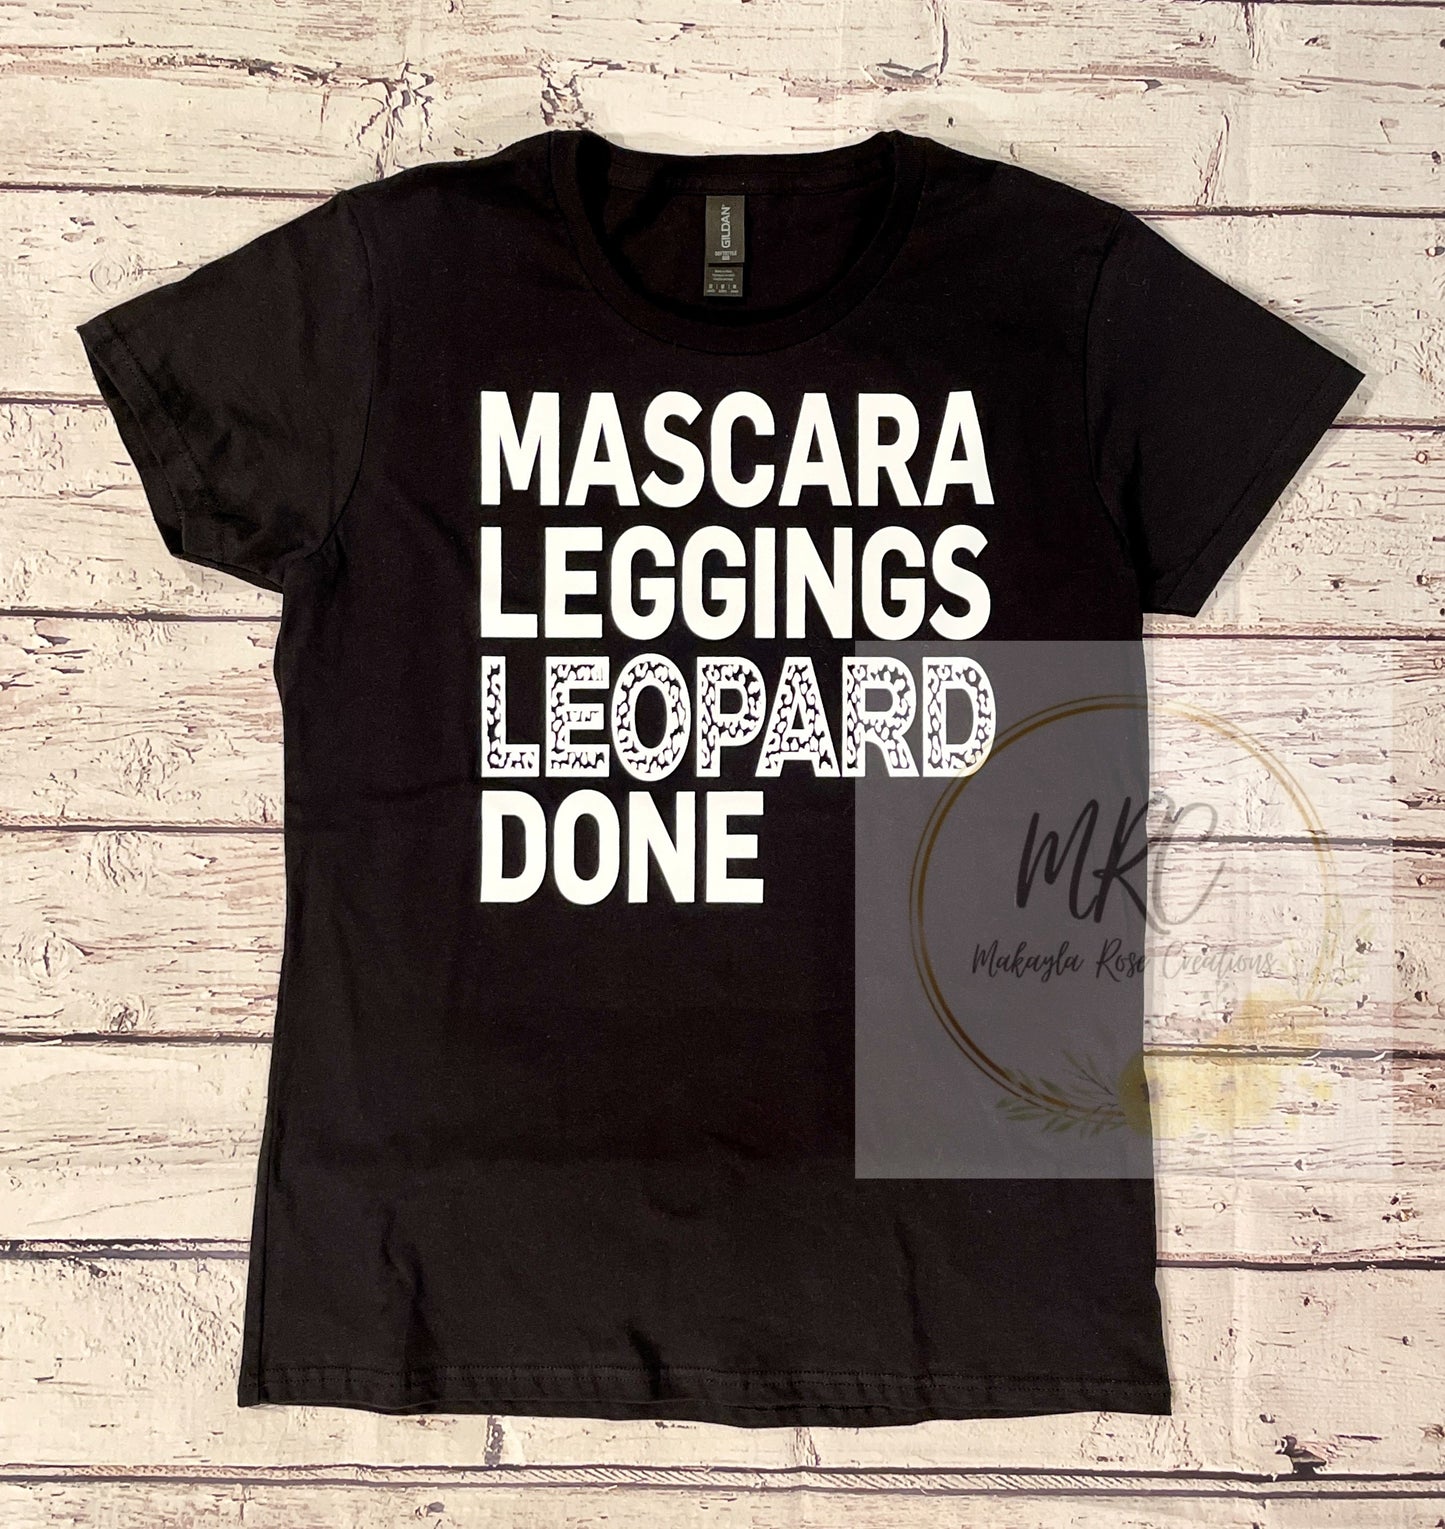 “Mascara Legging Leopard Done” T-Shirt